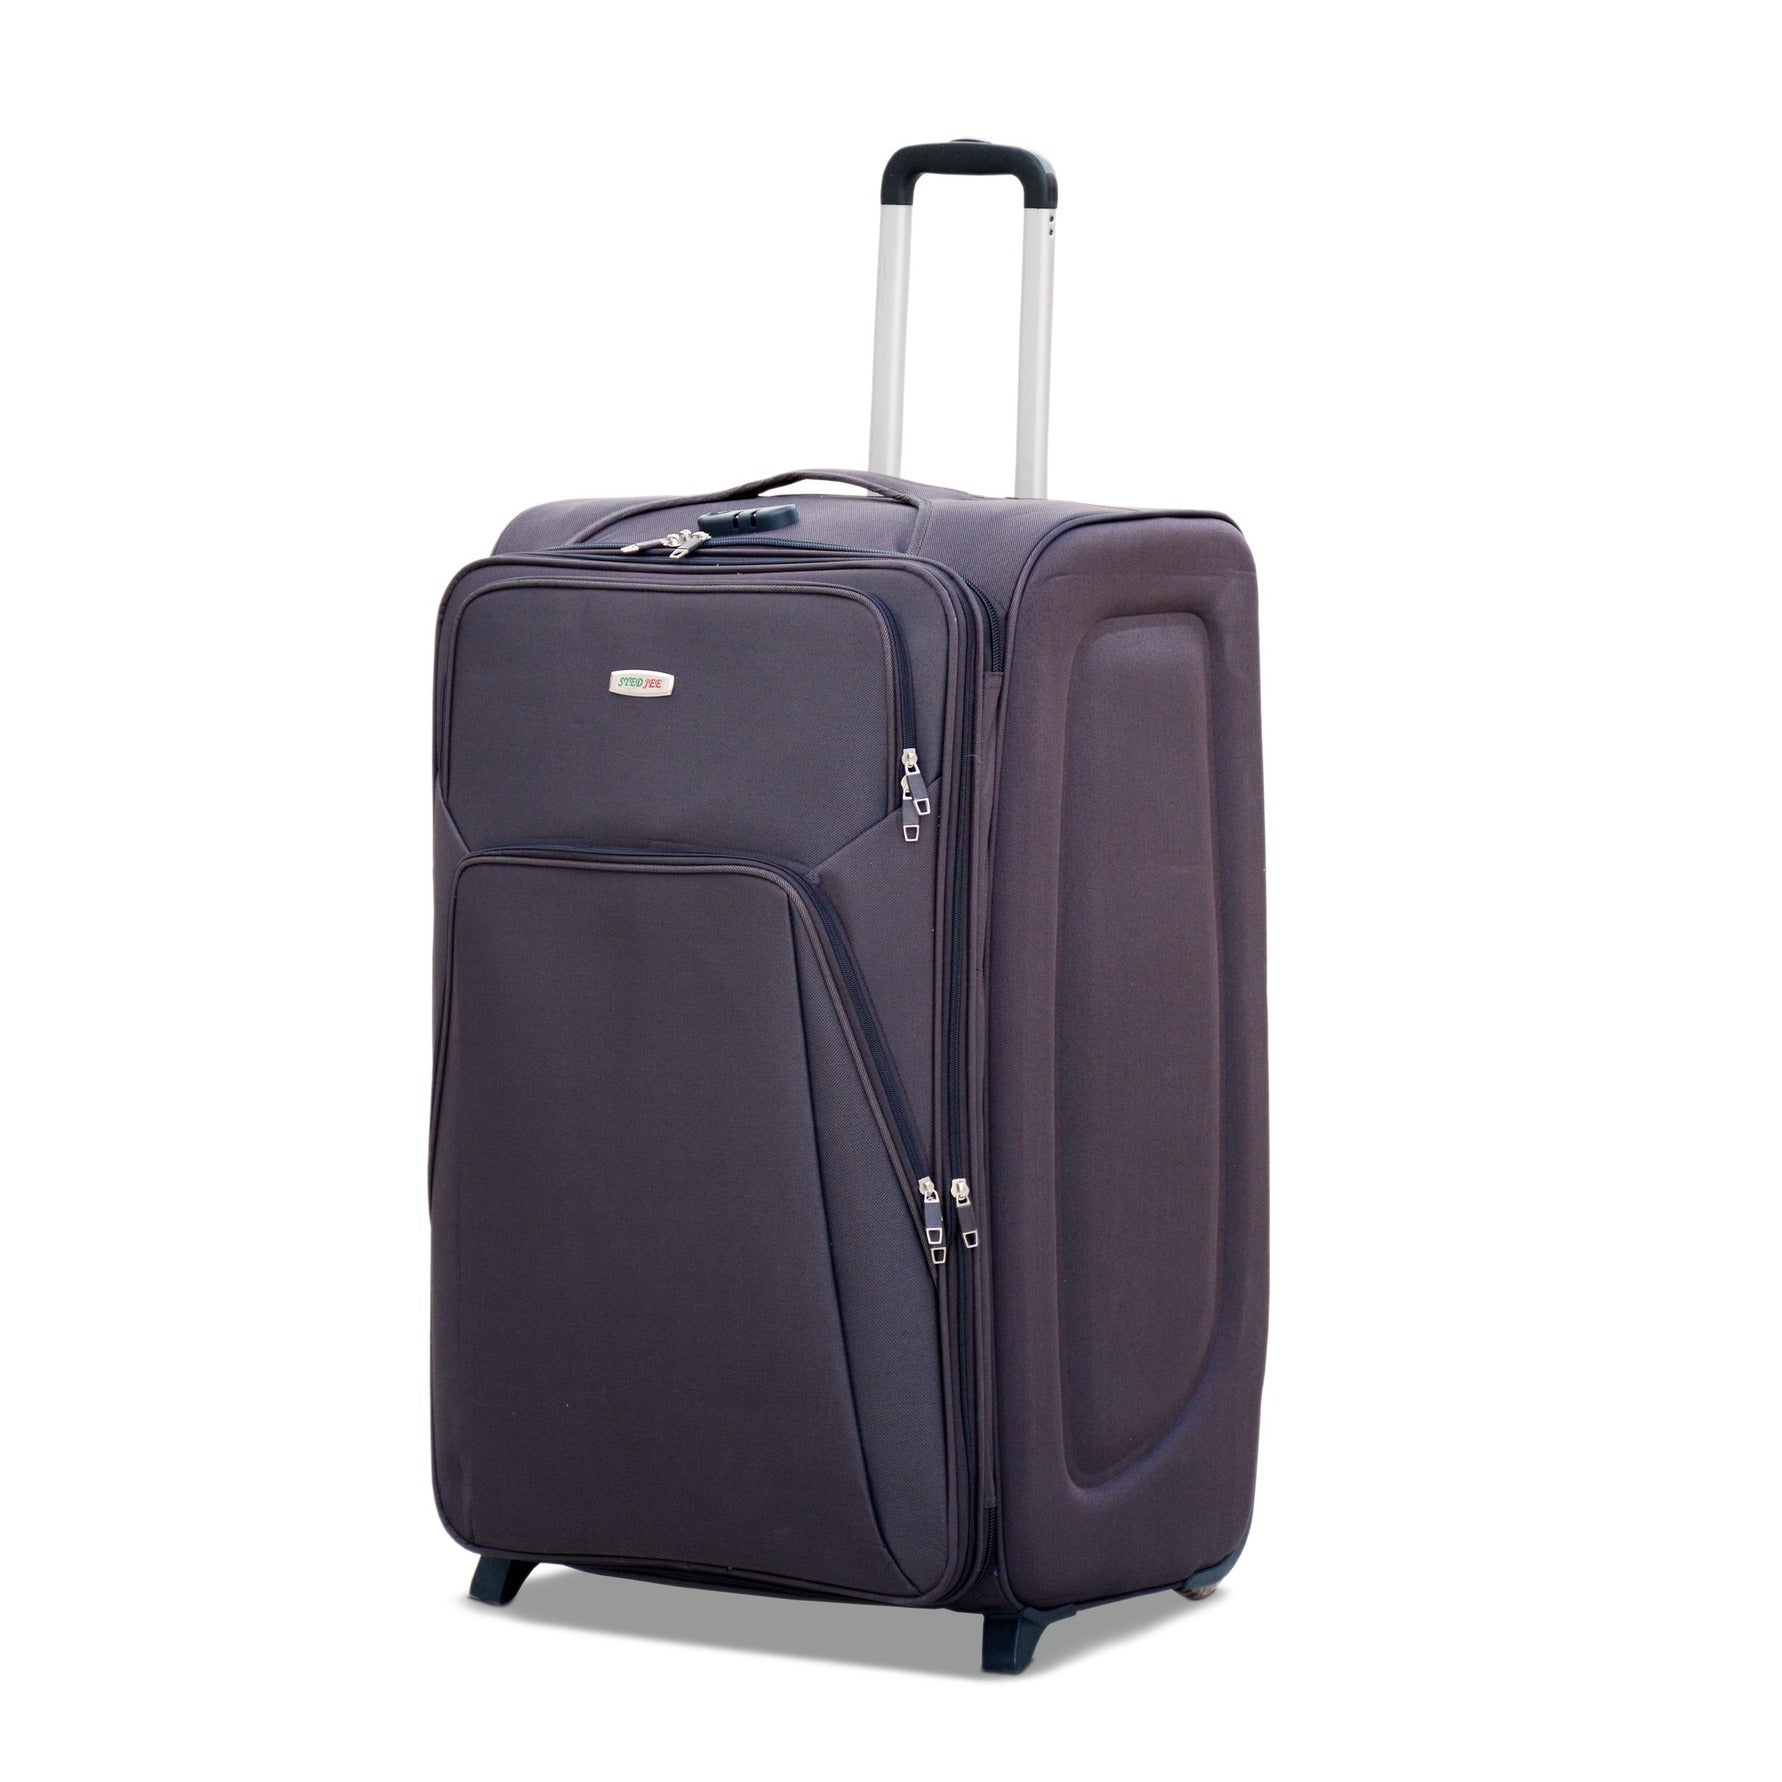 28" SJ JIAN 2 Wheel Lightweight Soft Material Luggage Bag Zaappy